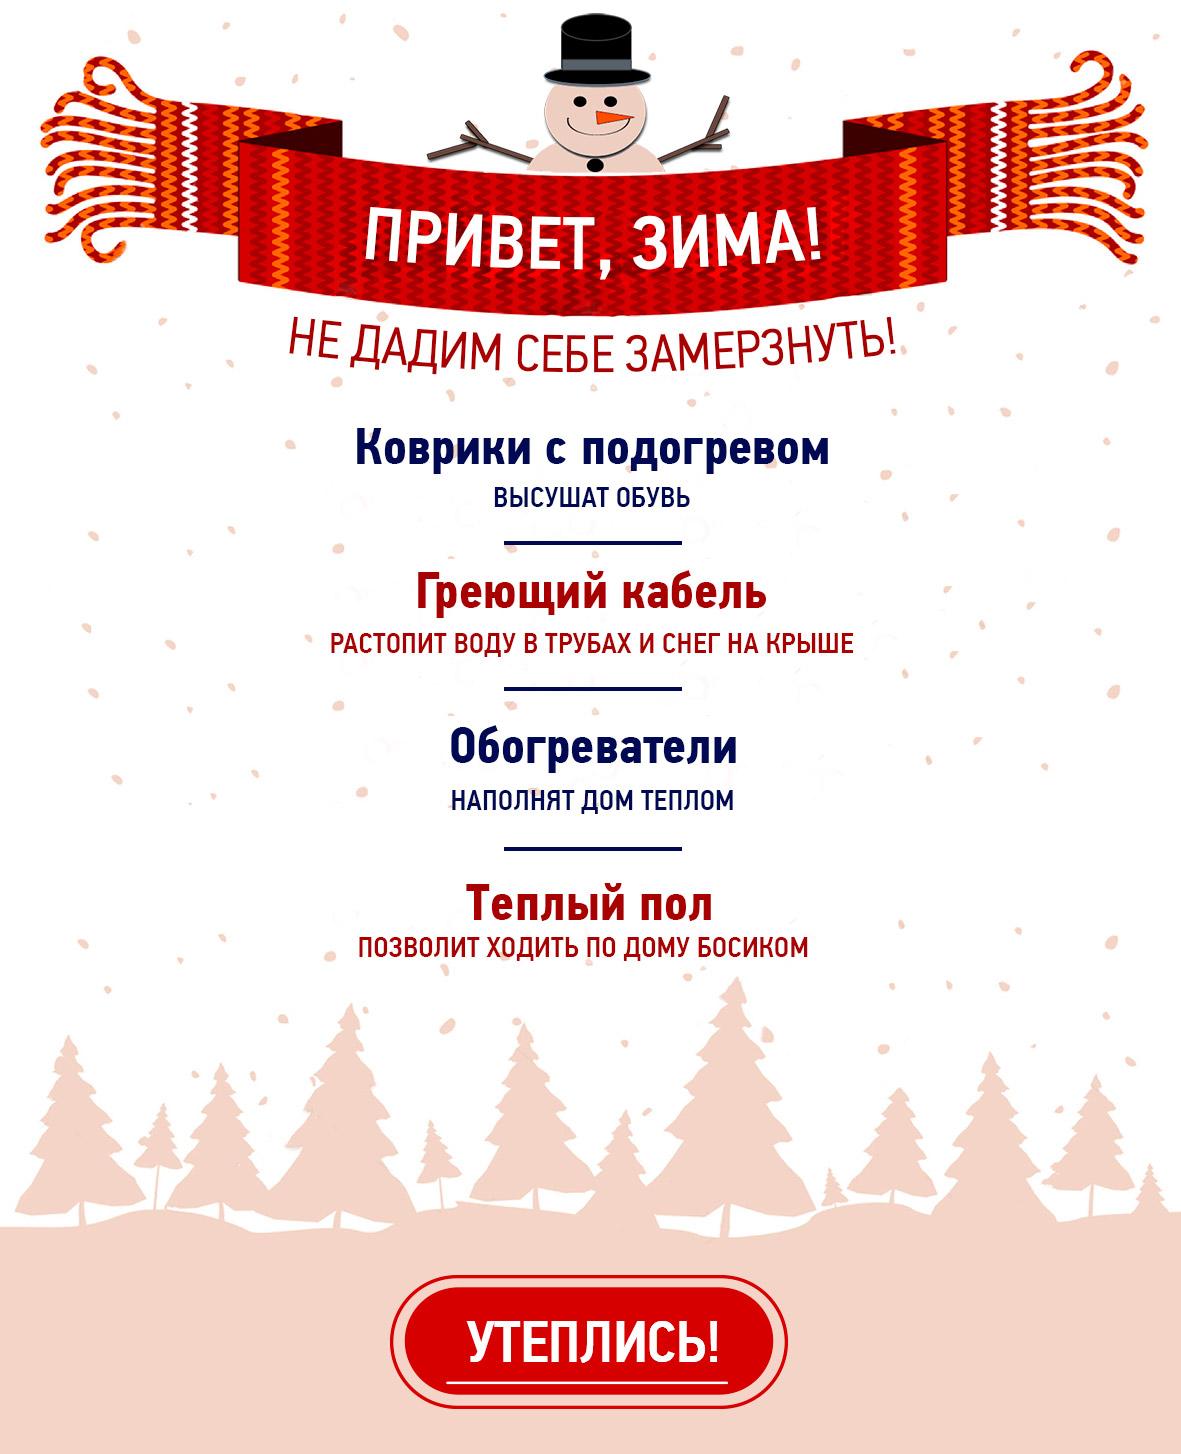 Привет, Зима! (GreenWord.ru)